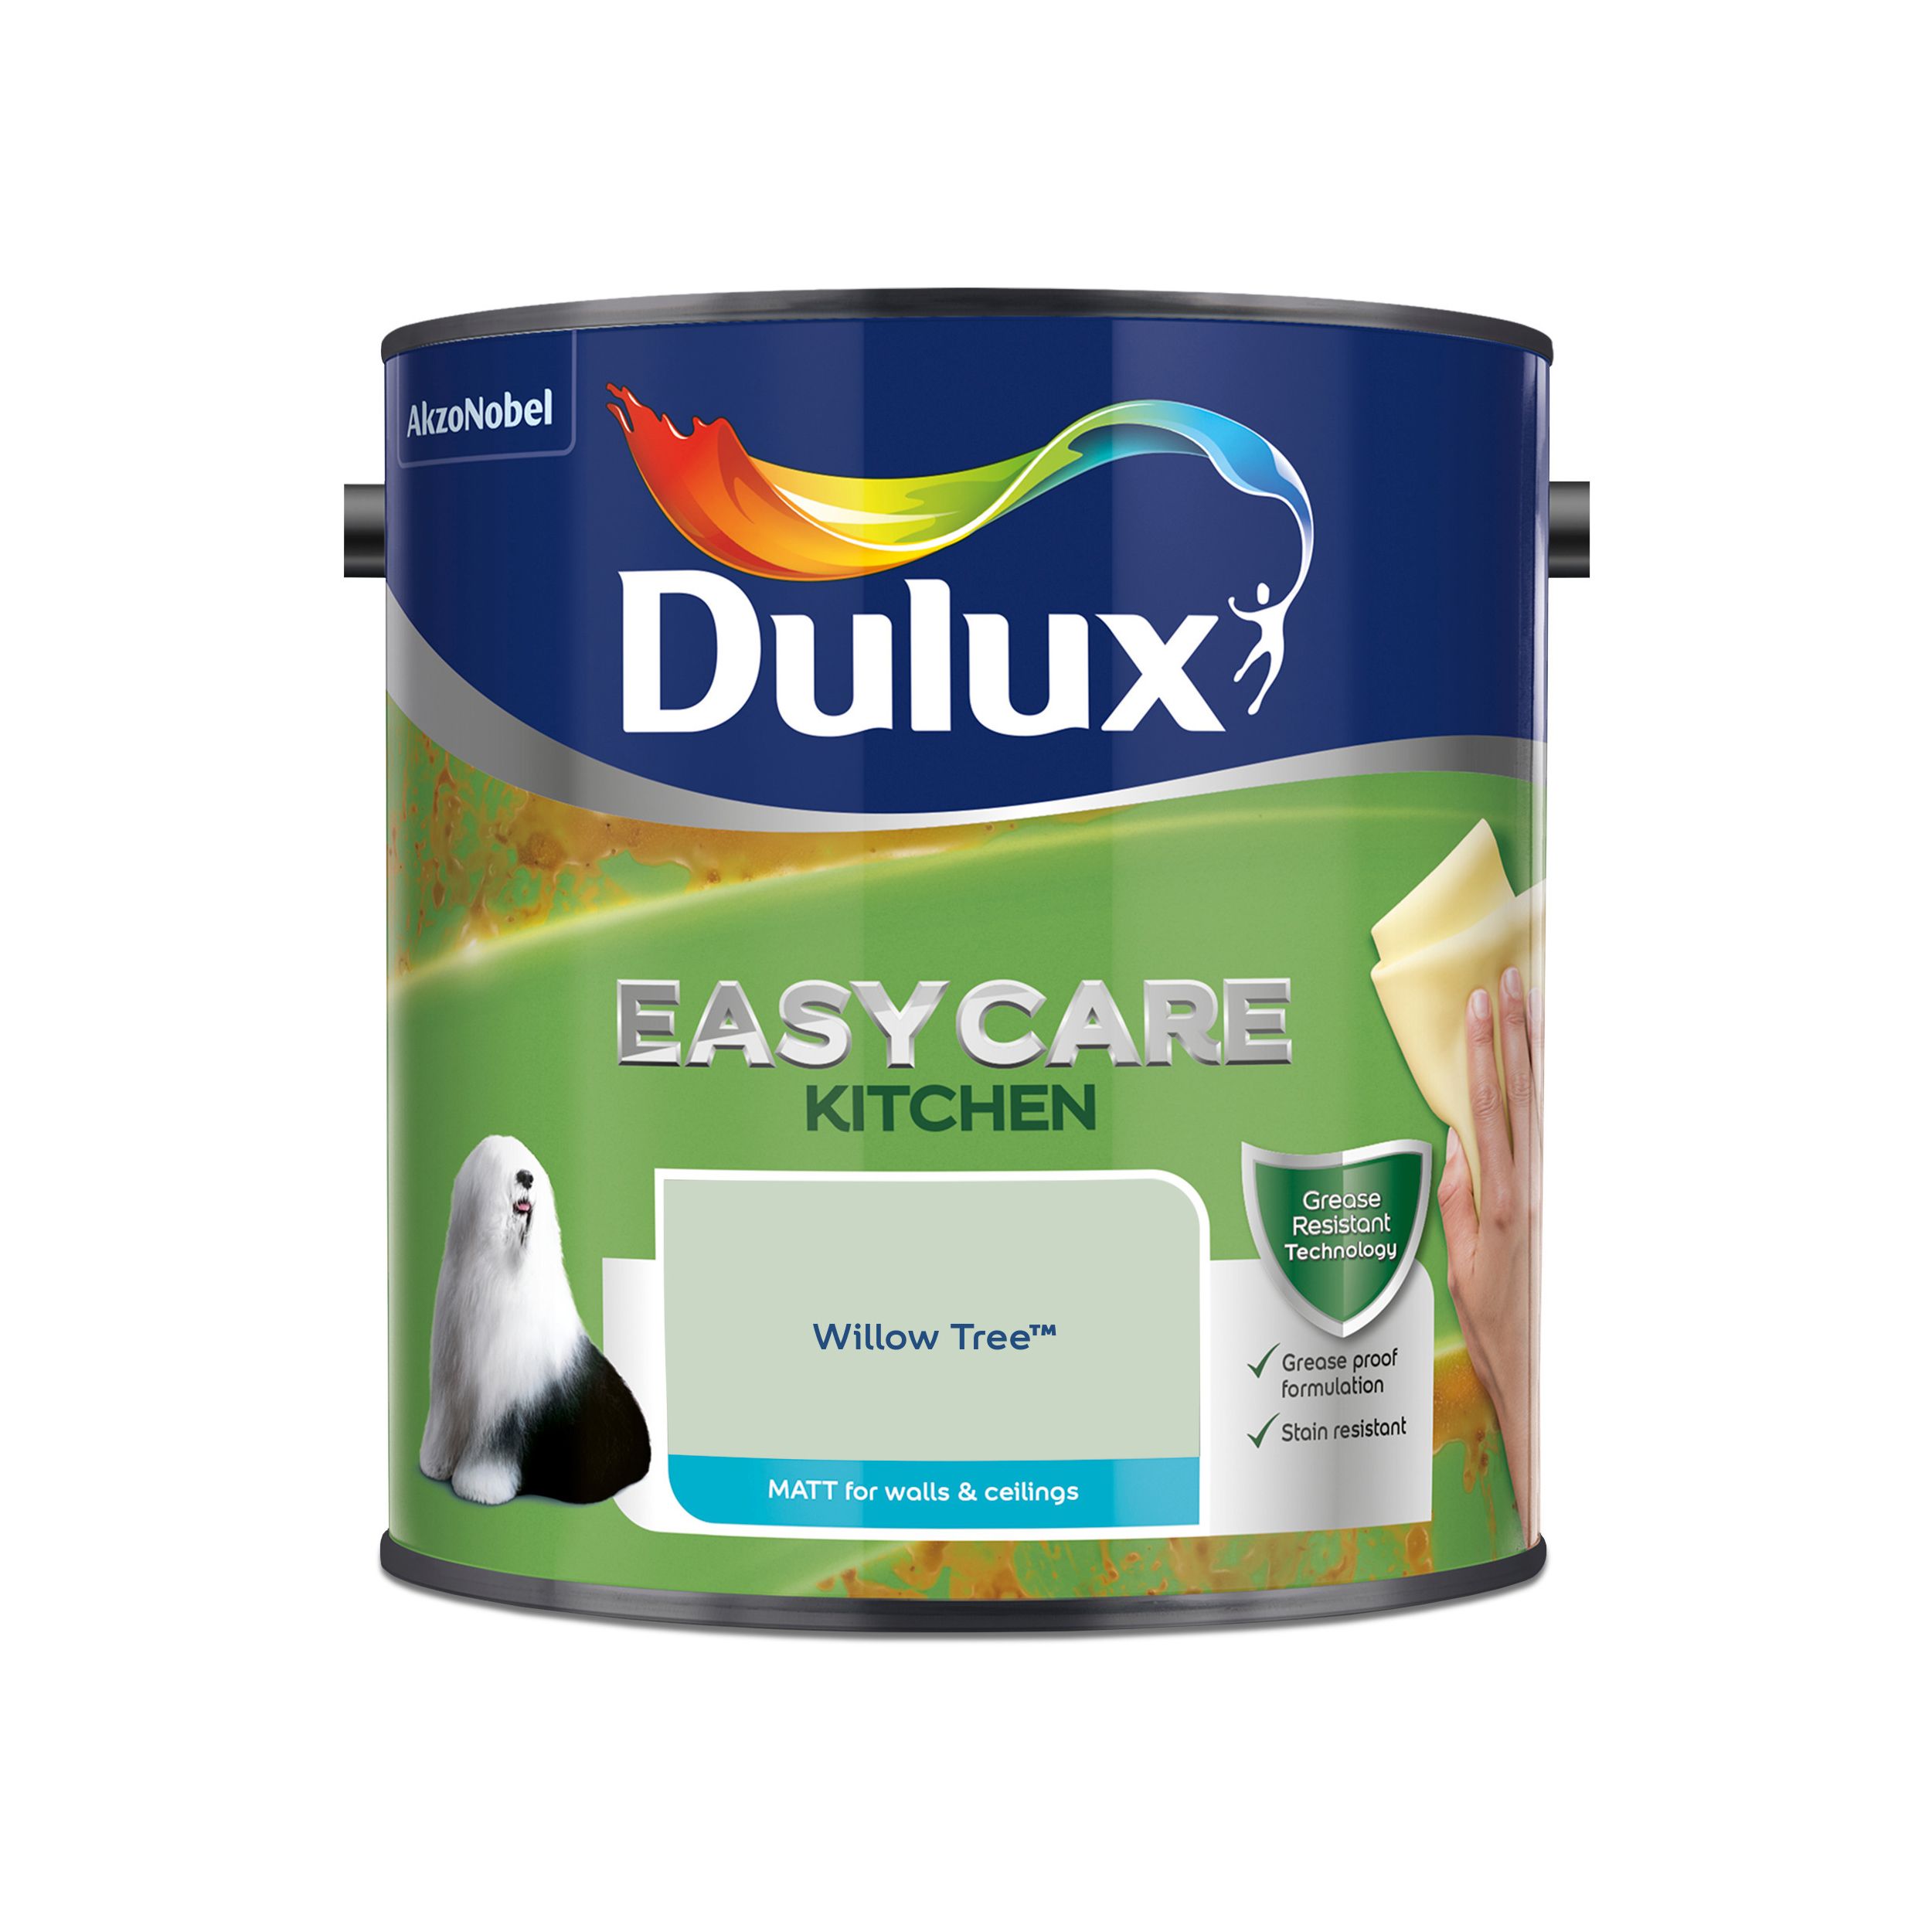 Dulux Easycare Willow tree Matt Emulsion paint, 2.5L